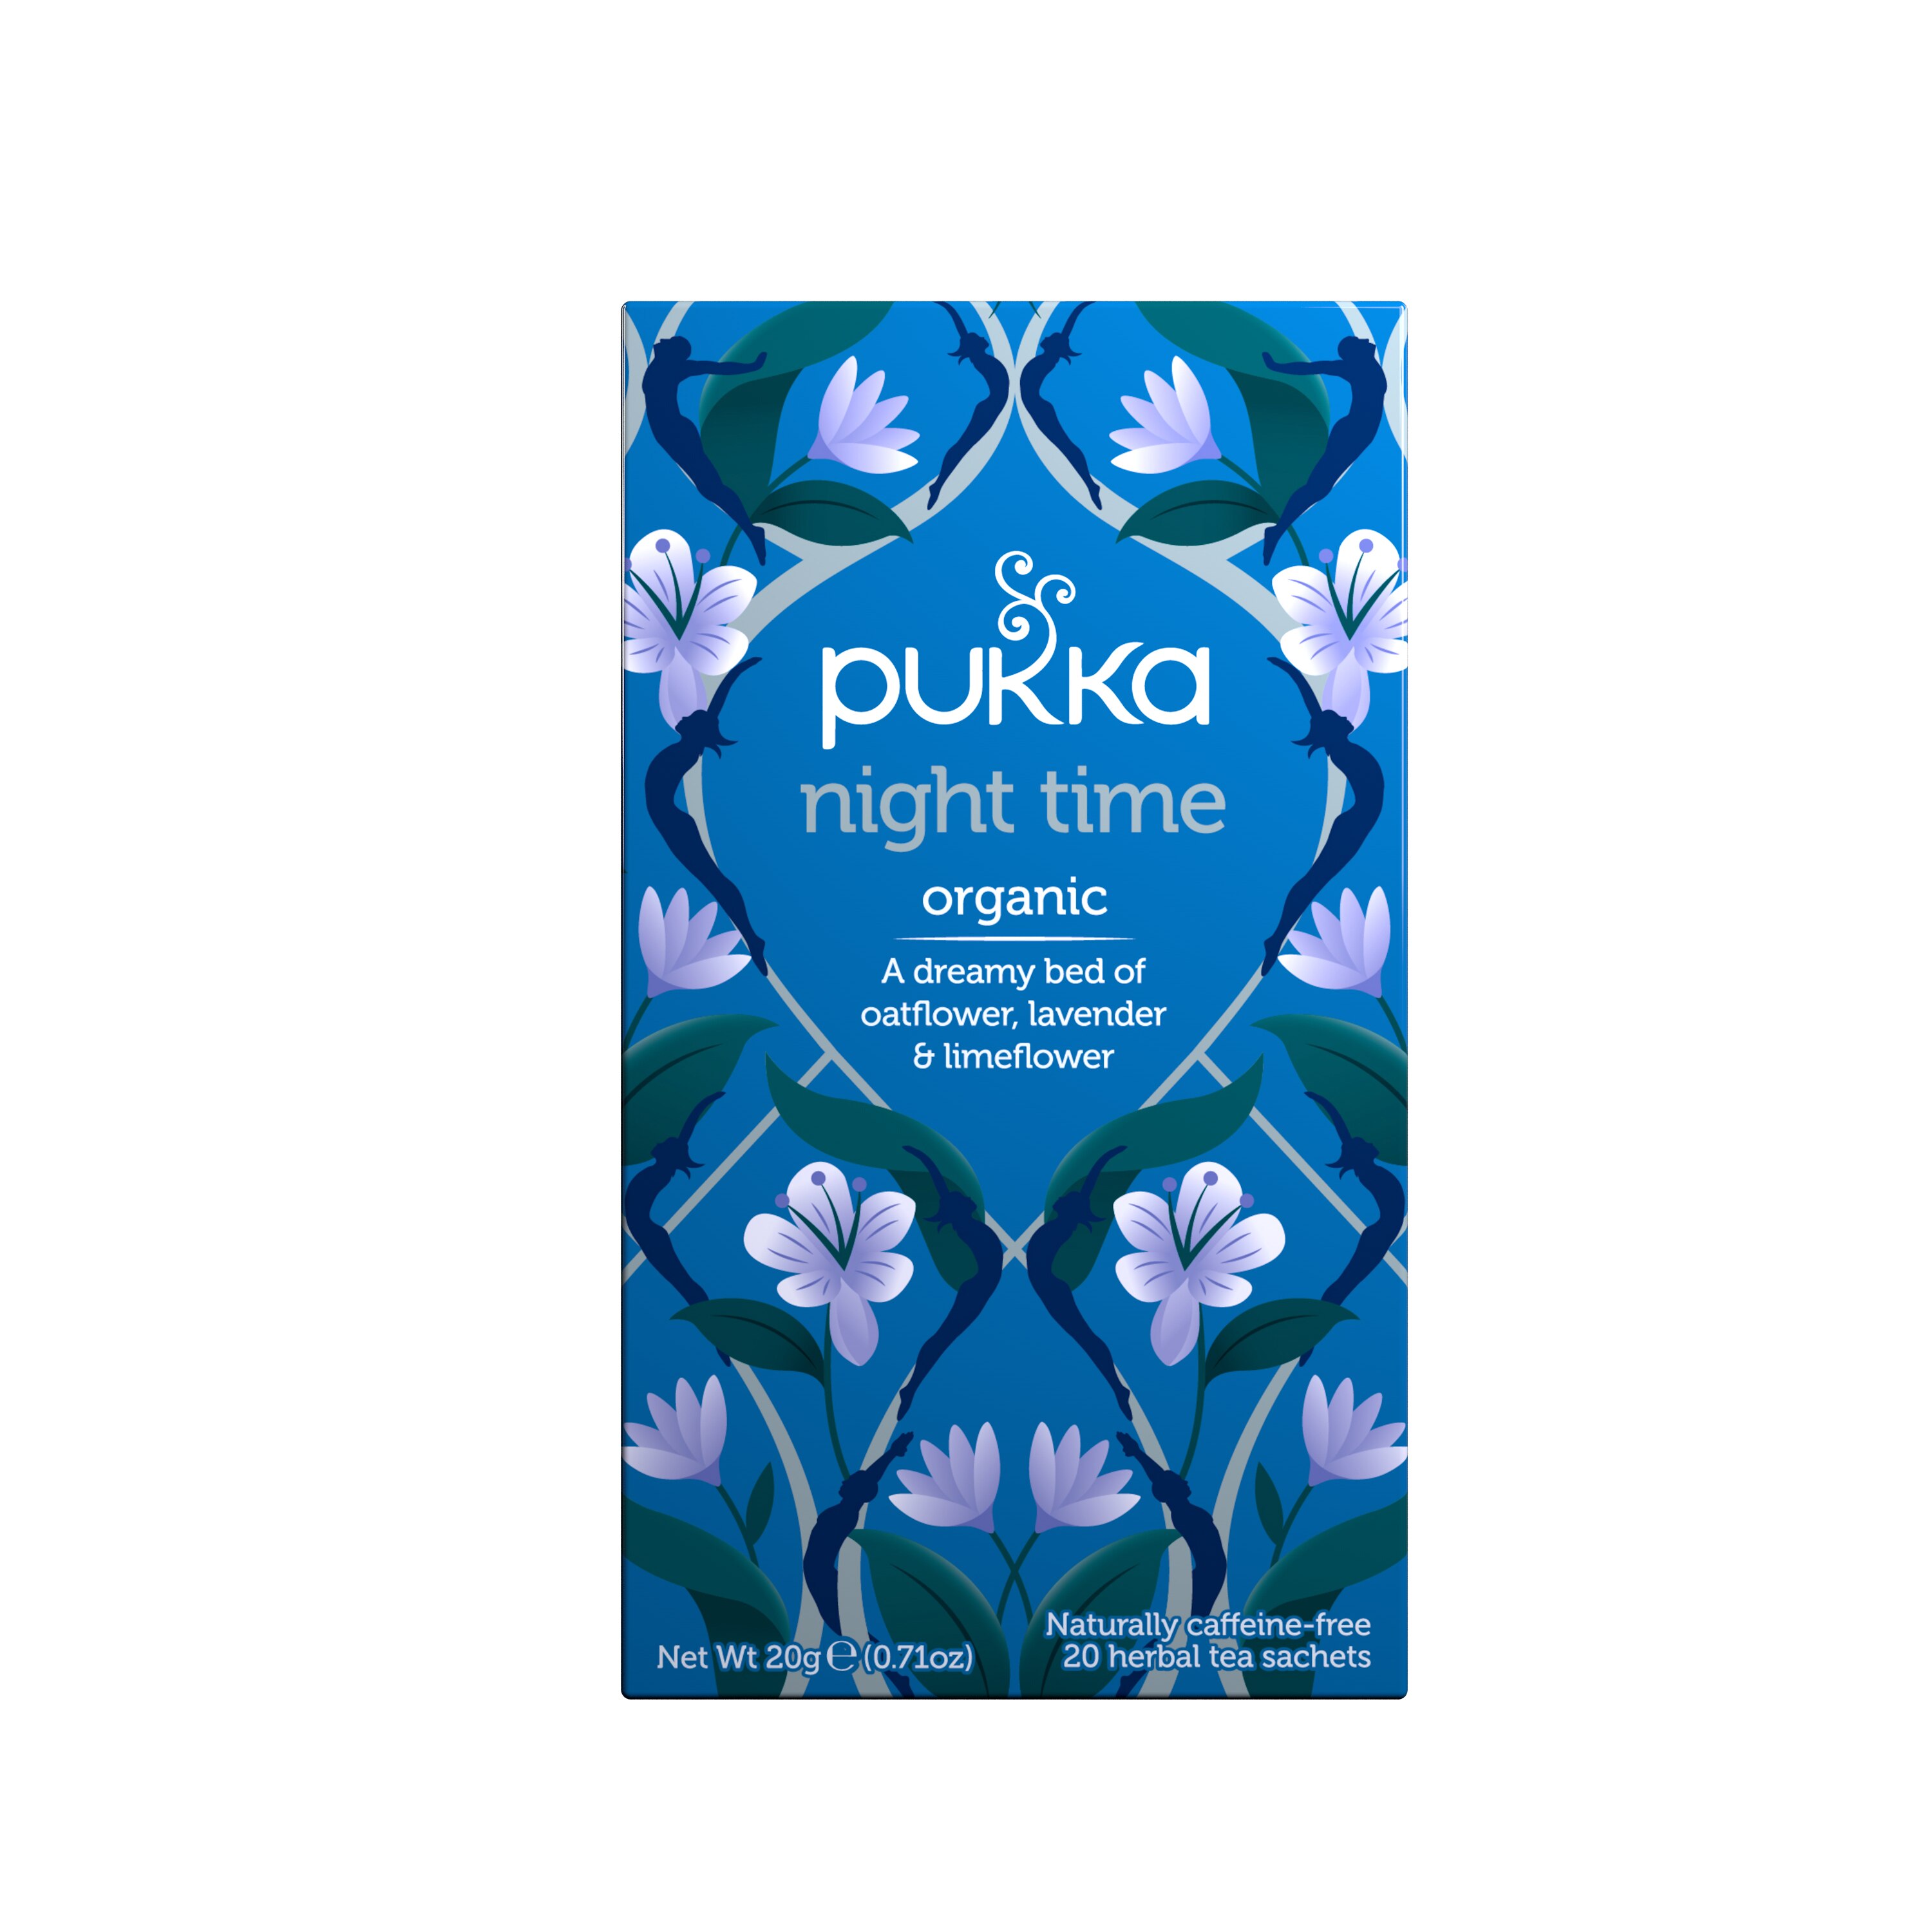 Pukka Herbal Organic Night Time Tea - Oatflower, Lavender & Limeflower, 20 CT